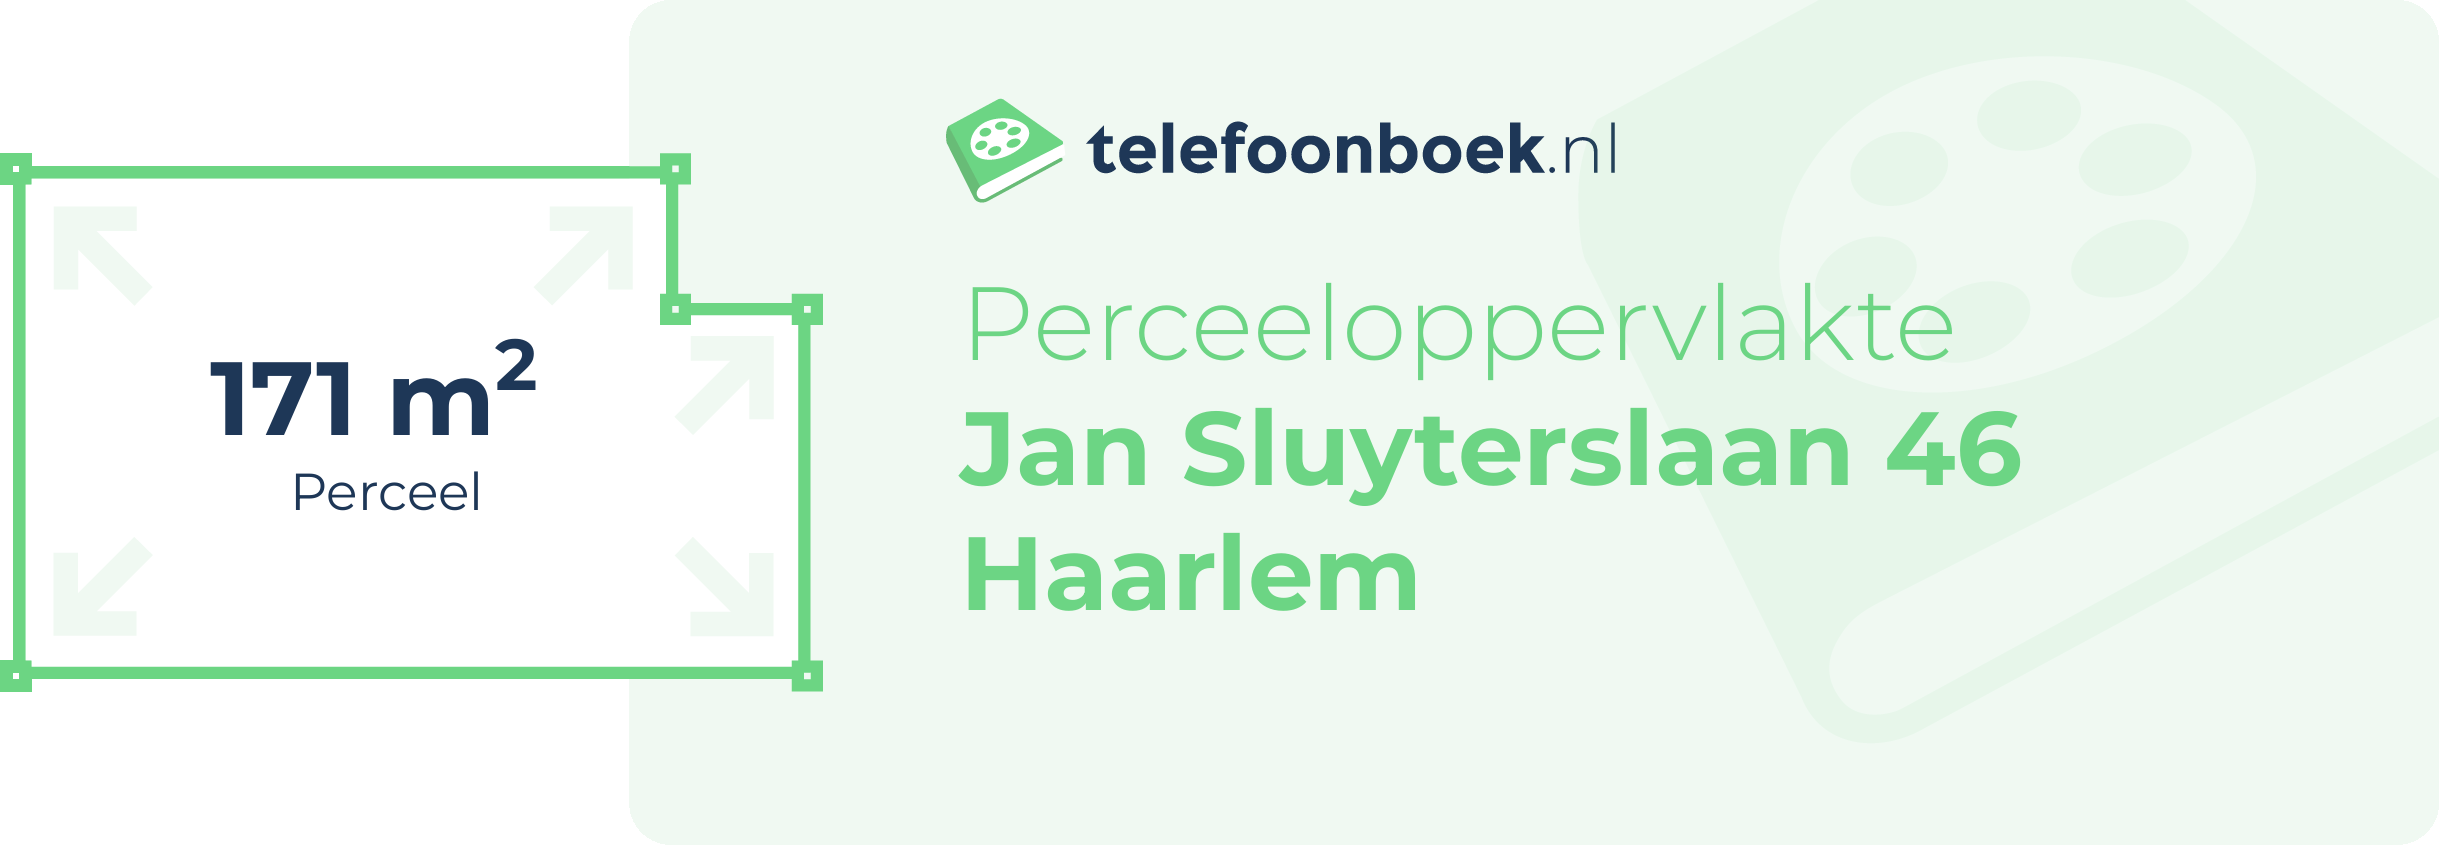 Perceeloppervlakte Jan Sluyterslaan 46 Haarlem